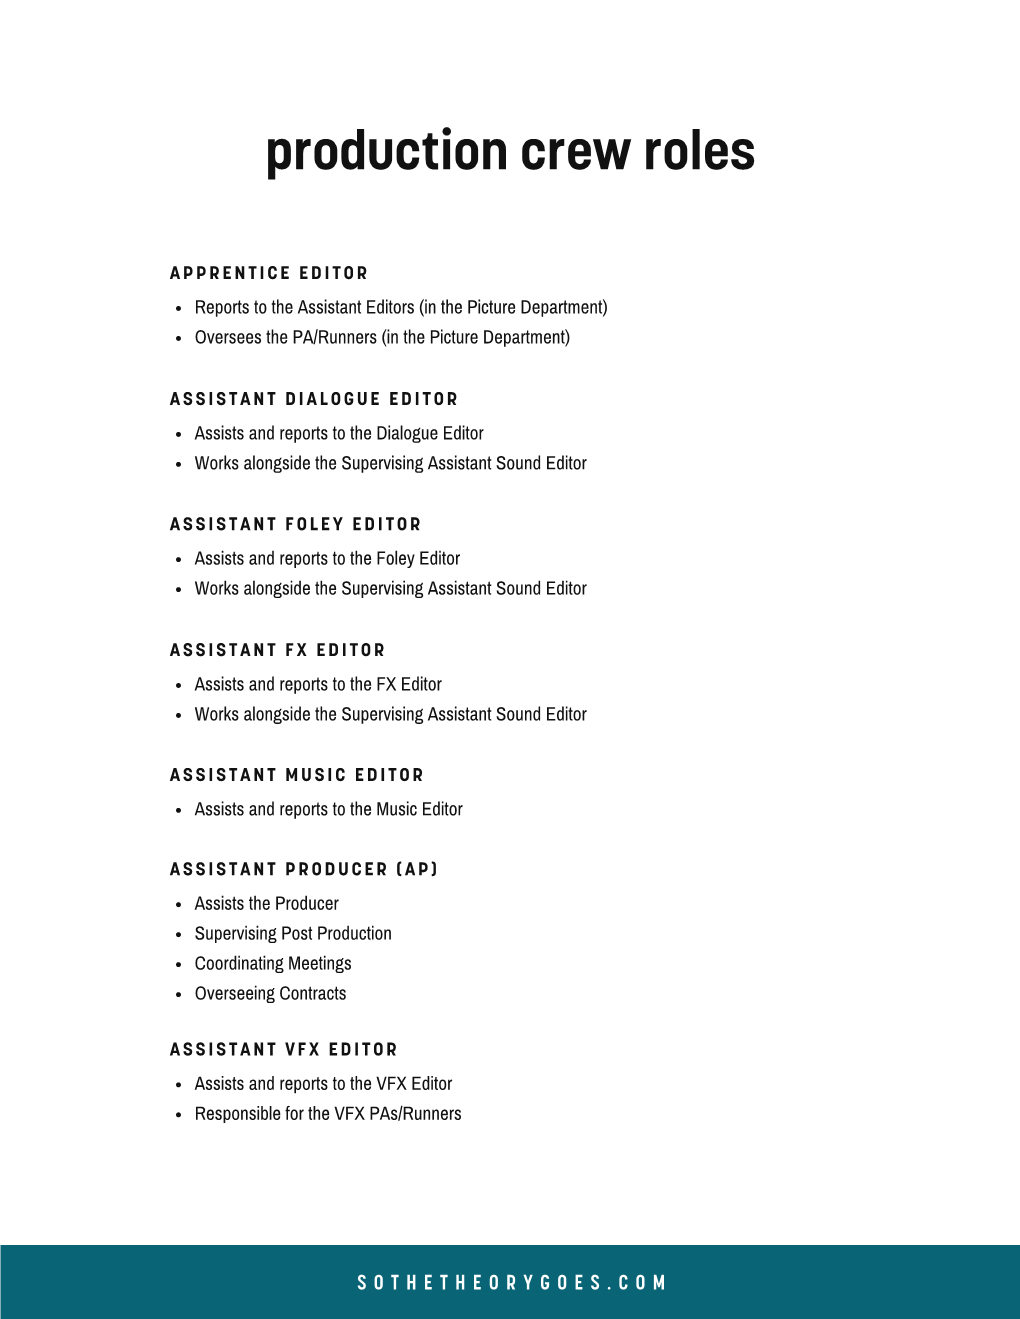 Production Crew Roles